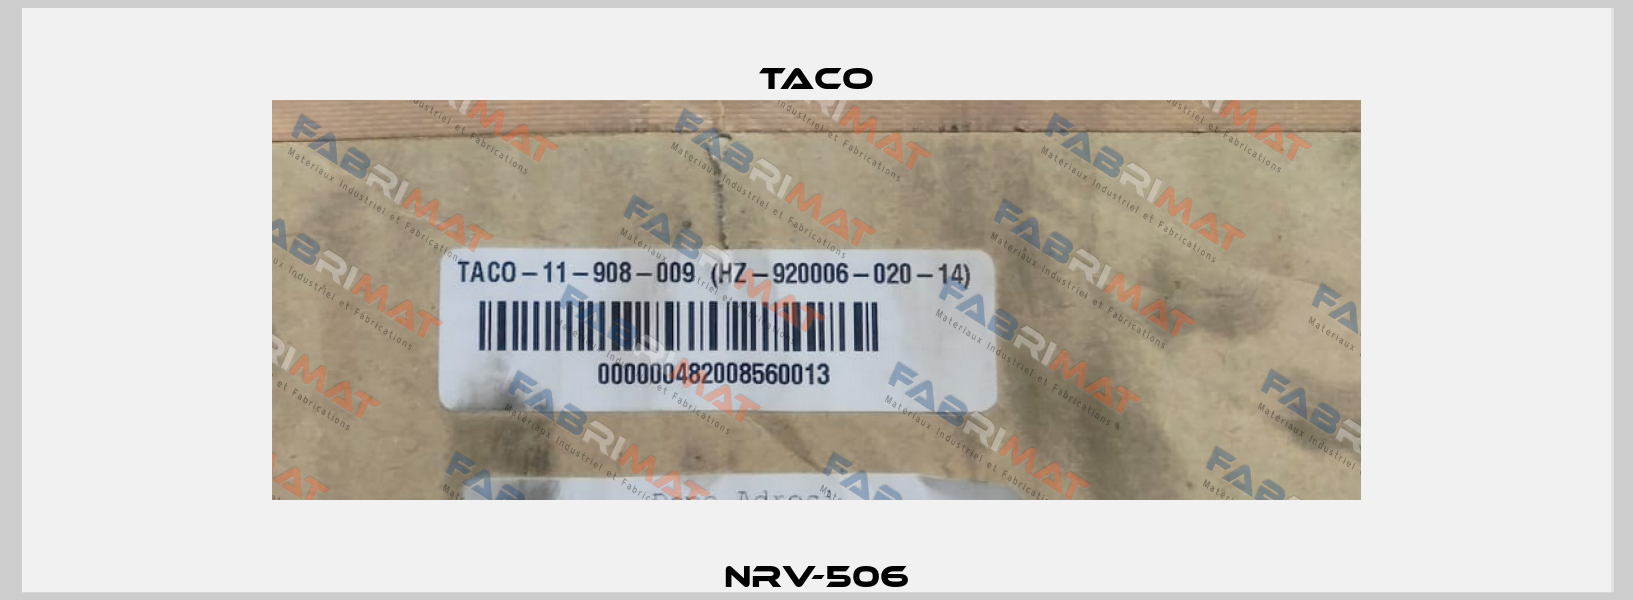 NRV-506 Taco